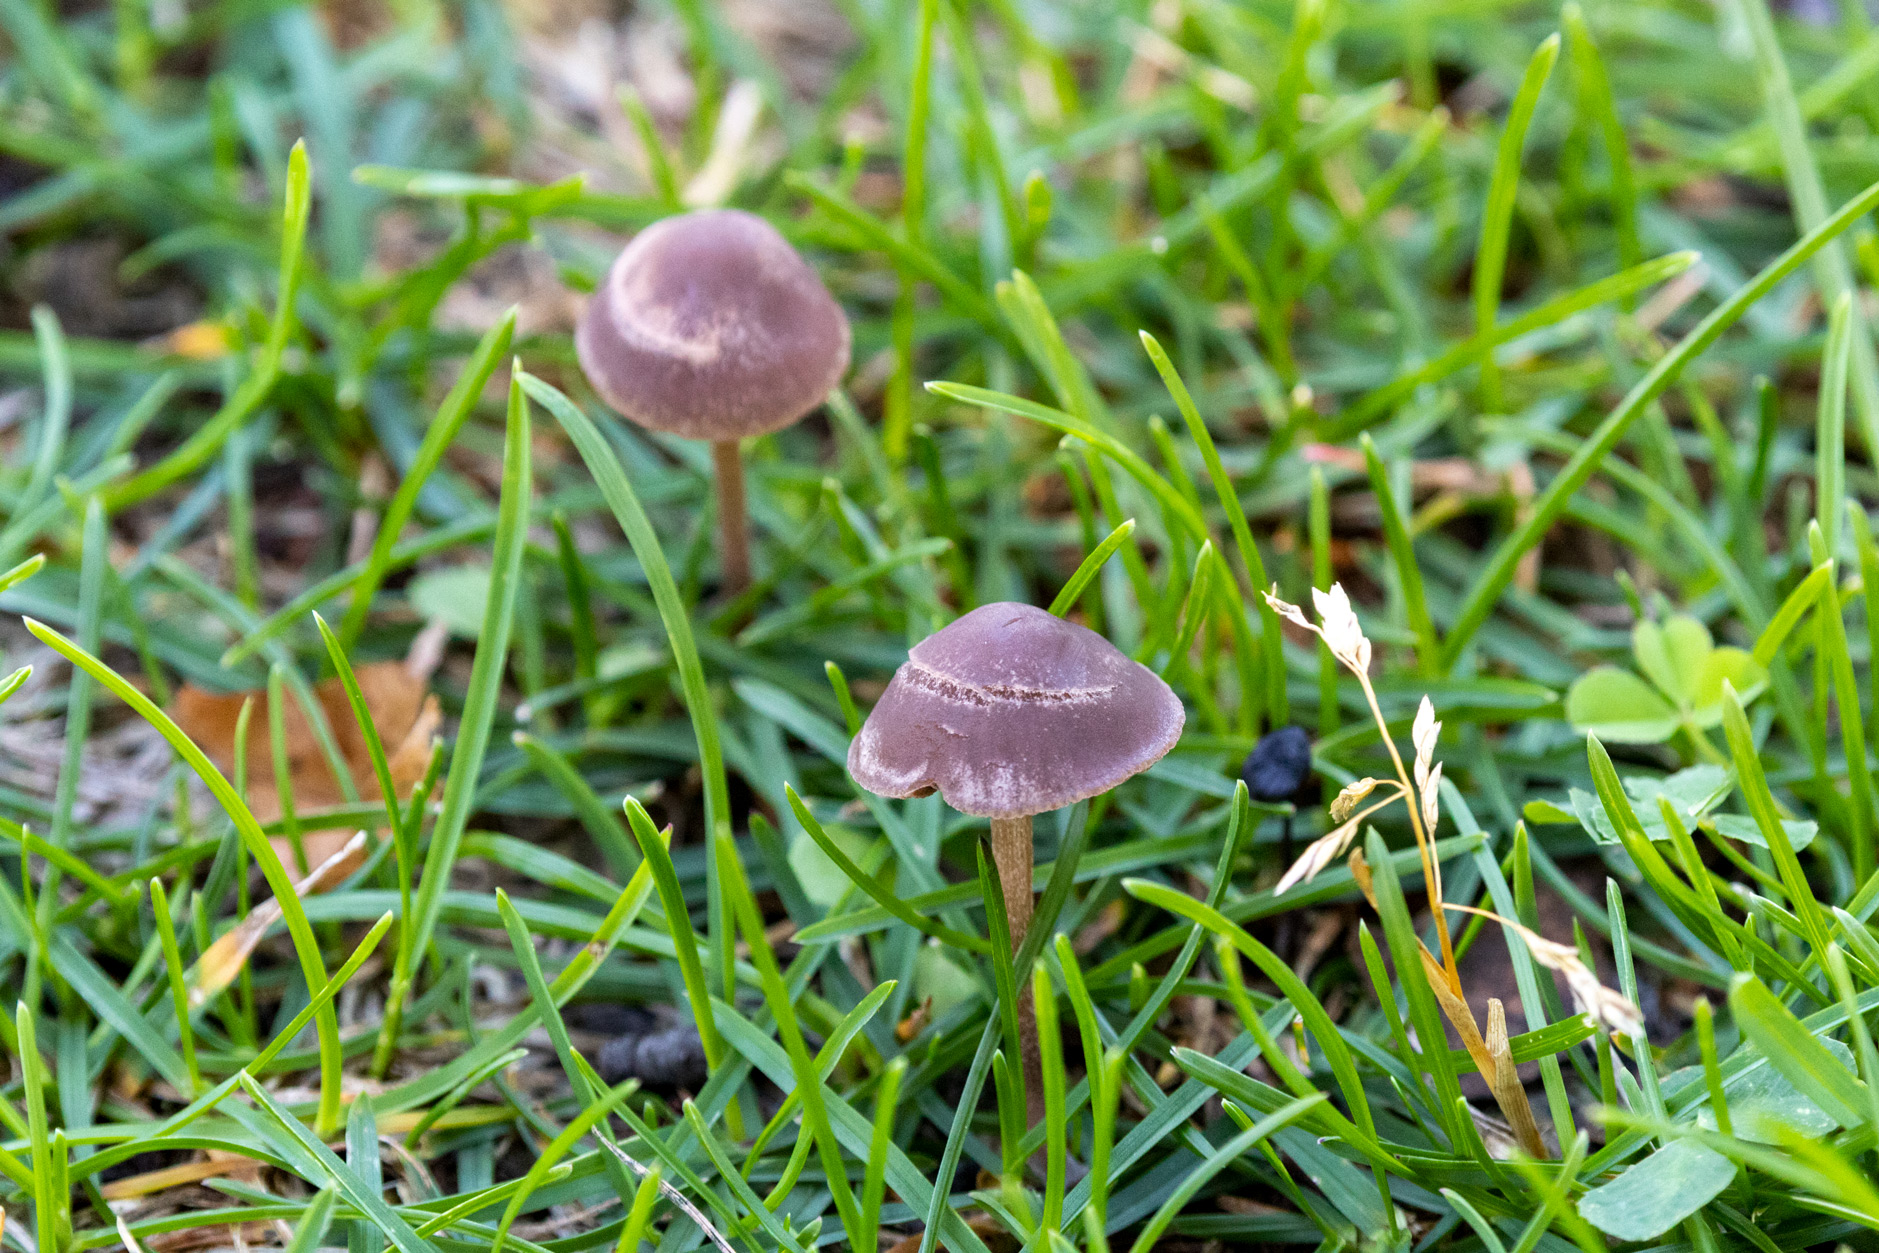 Rounded purple-brown mushrooms on tall slim brown stalks